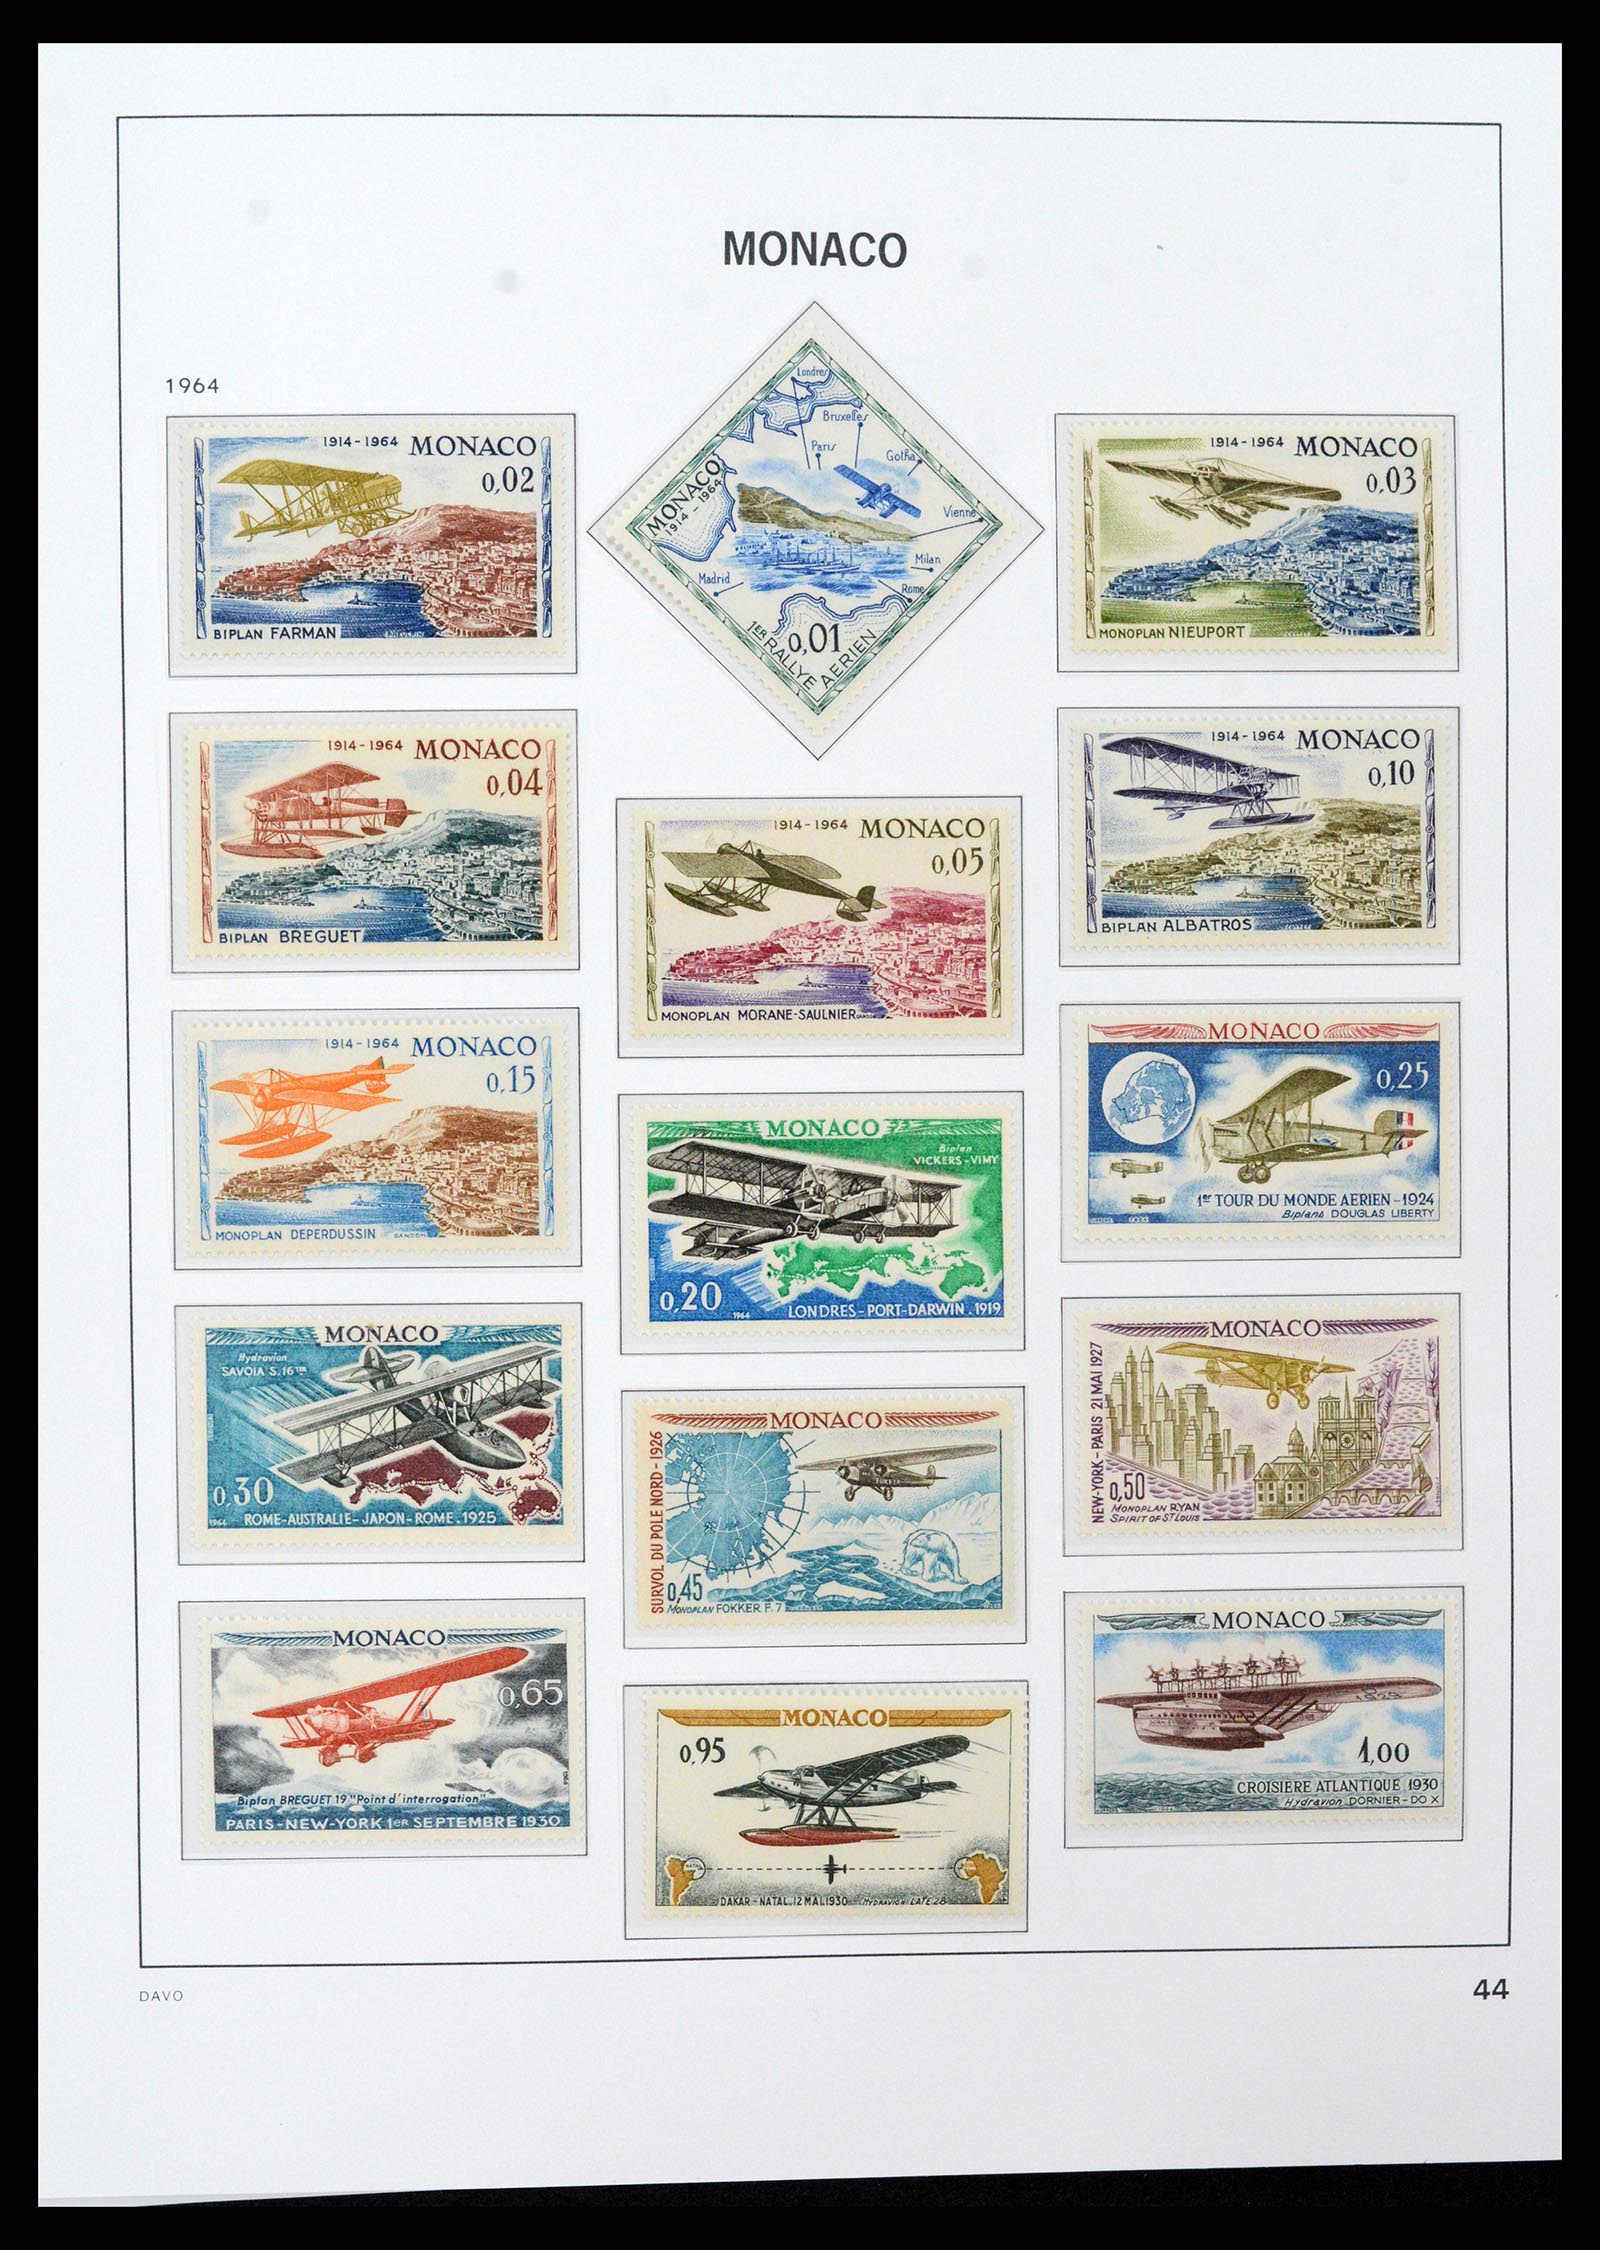 37279 044 - Stamp collection 37279 Monaco 1885-1969.